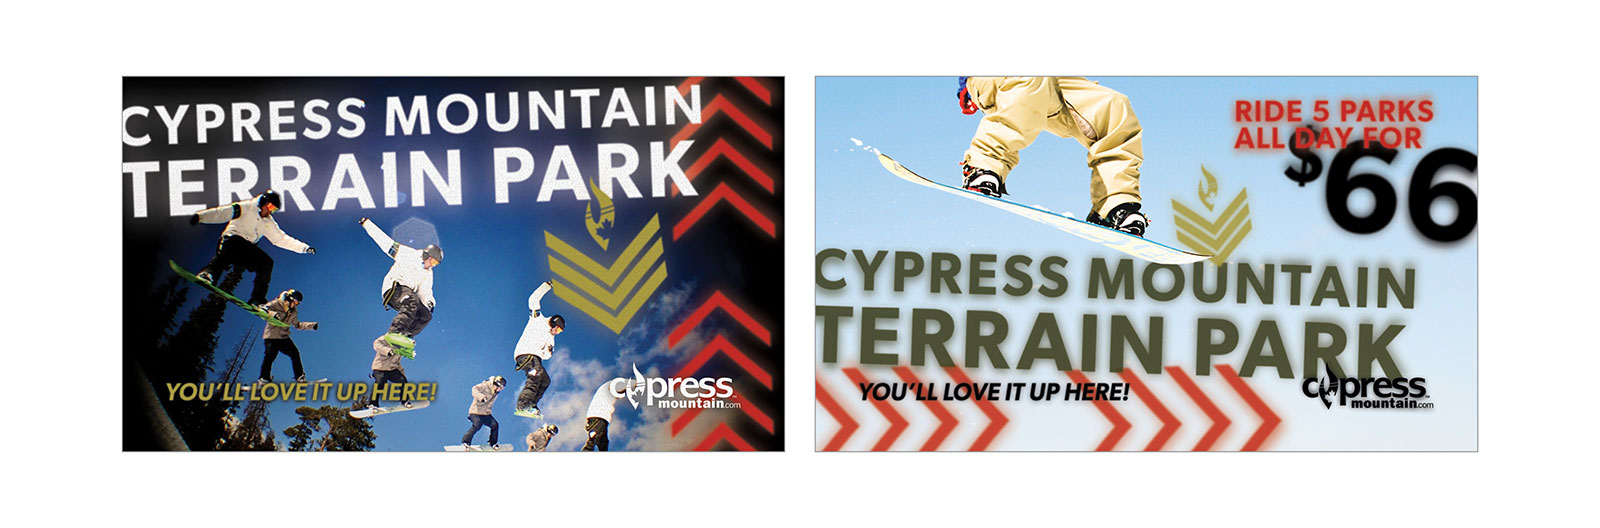 Cypress Terrain Parks print ad concepts.